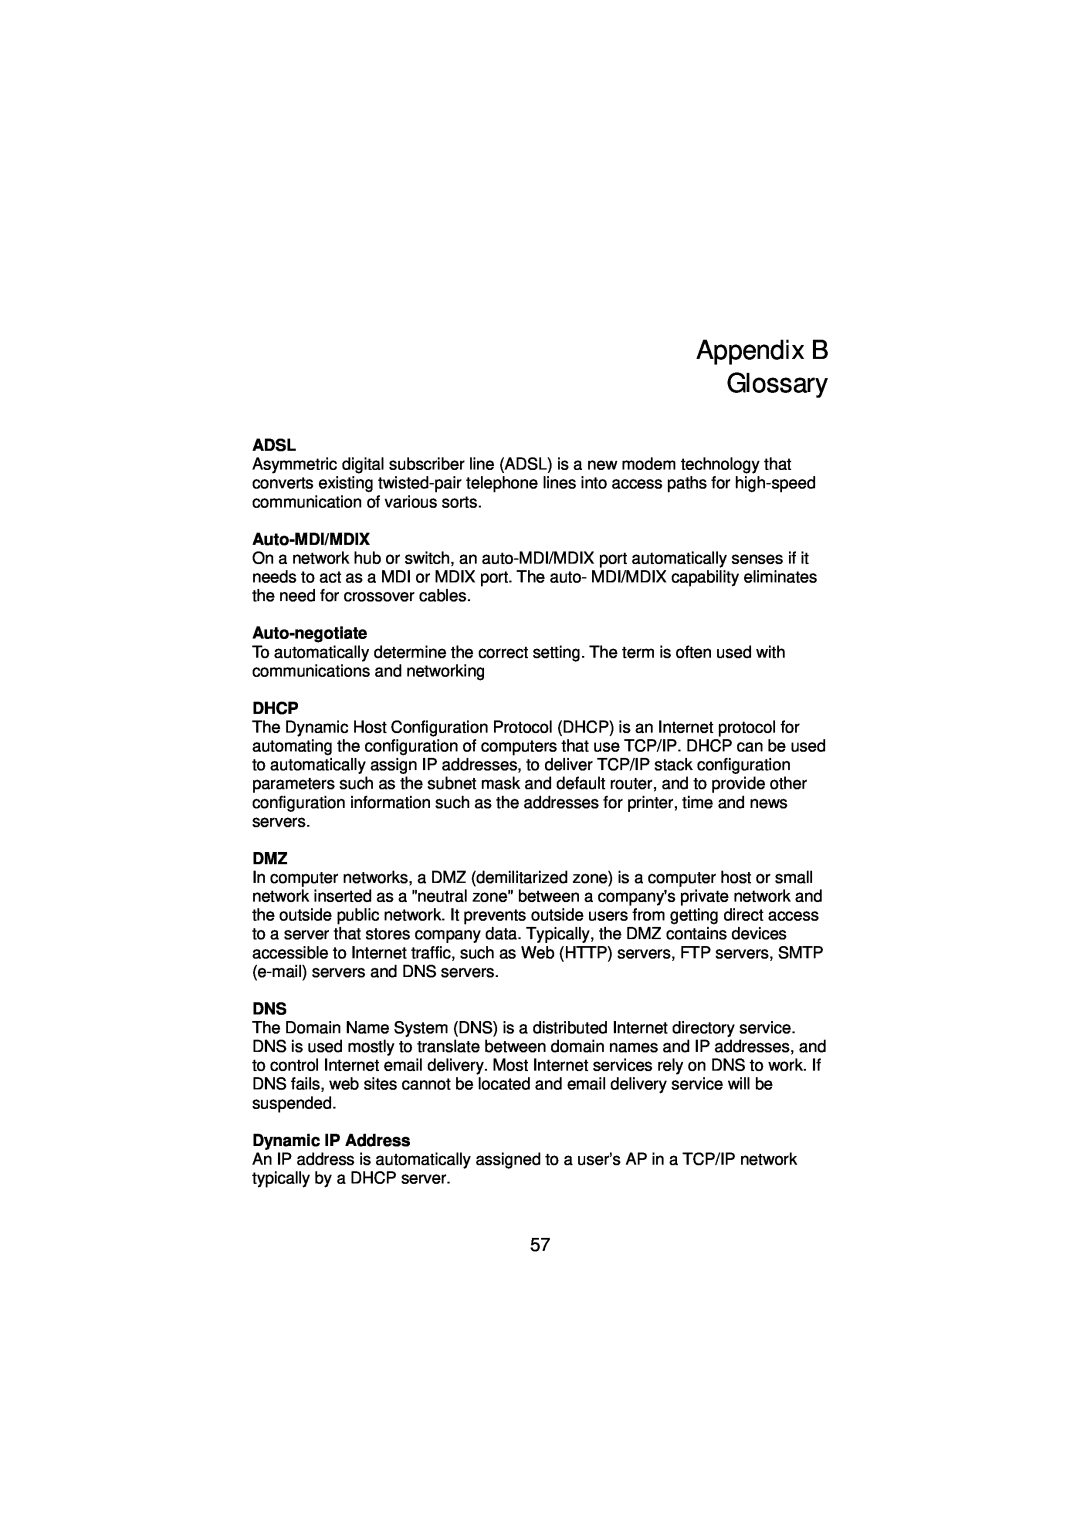 Gigabyte GN-BR01G manual Appendix B Glossary, Adsl, Auto-MDI/MDIX, Auto-negotiate, Dhcp, Dynamic IP Address 